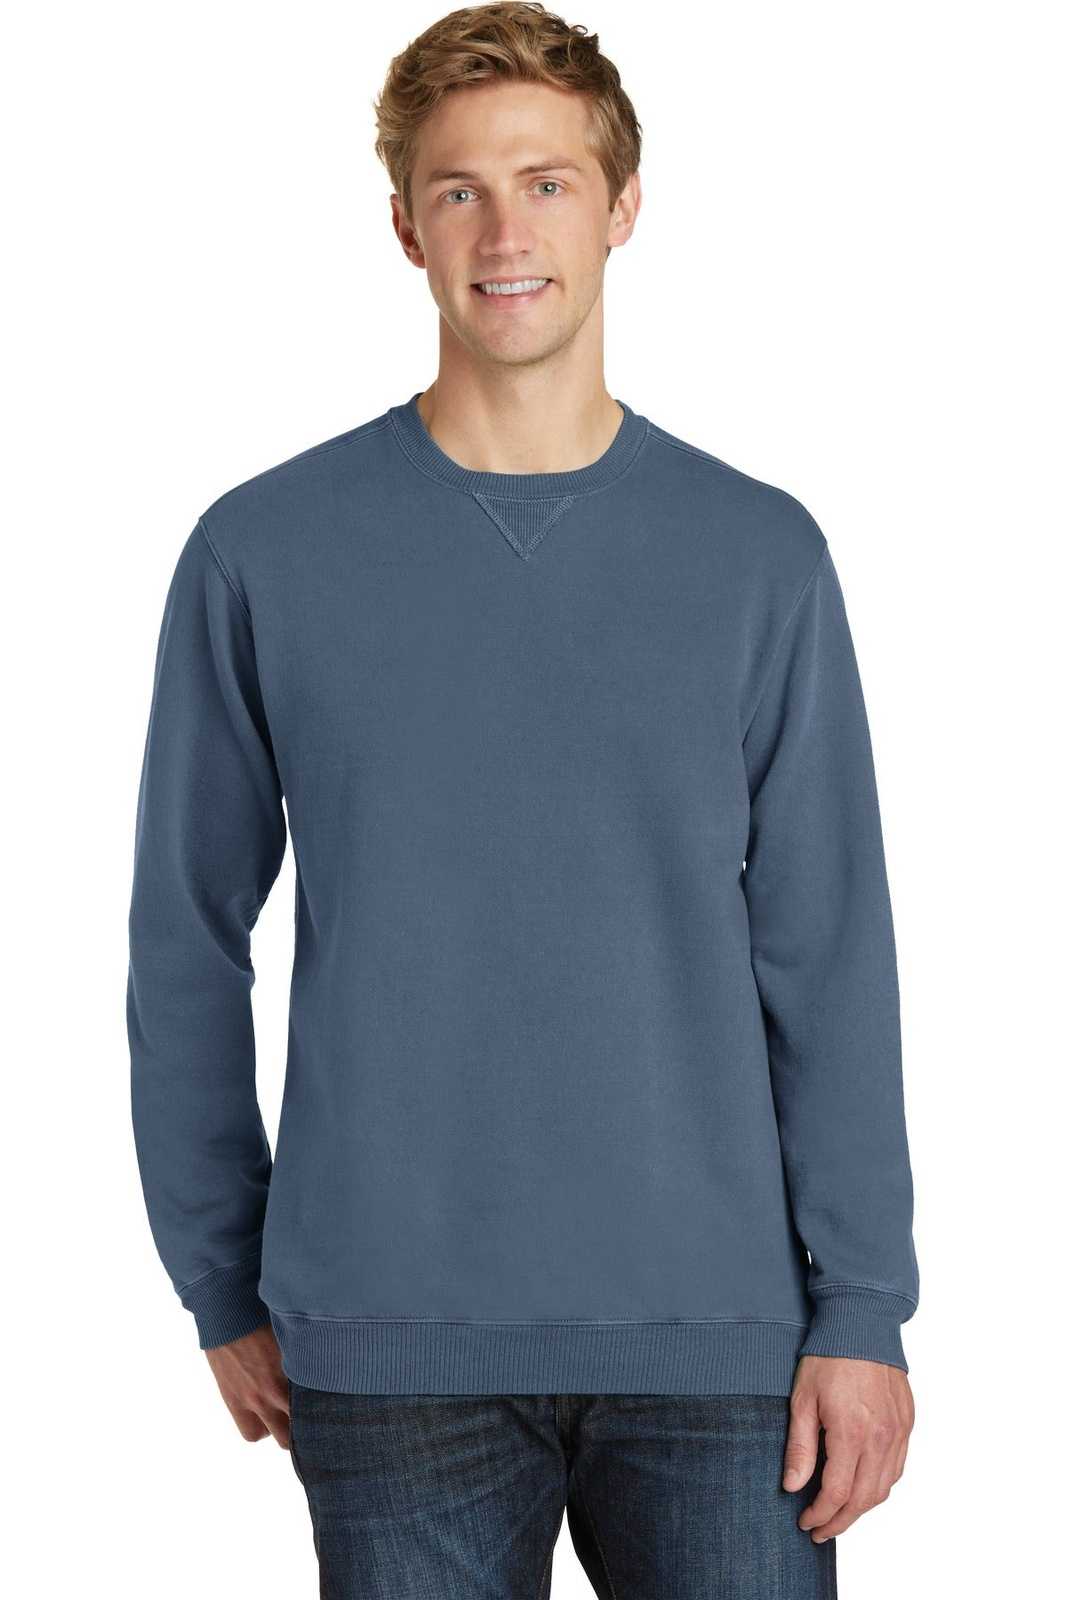 Port & Company PC098 Beach Wash Garment-Dyed Sweatshirt - Denim Blue - HIT a Double - 1